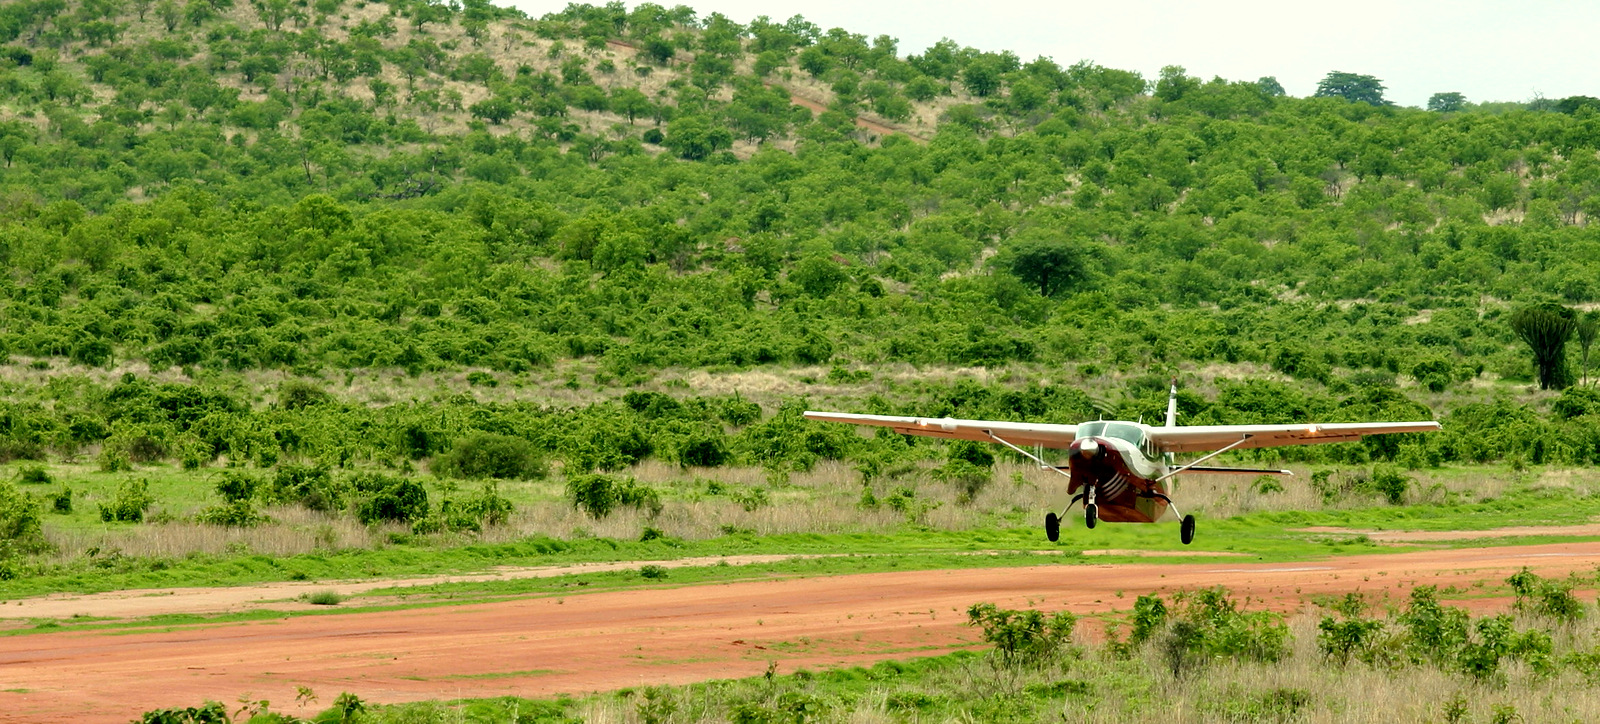 Msembe Airstrip